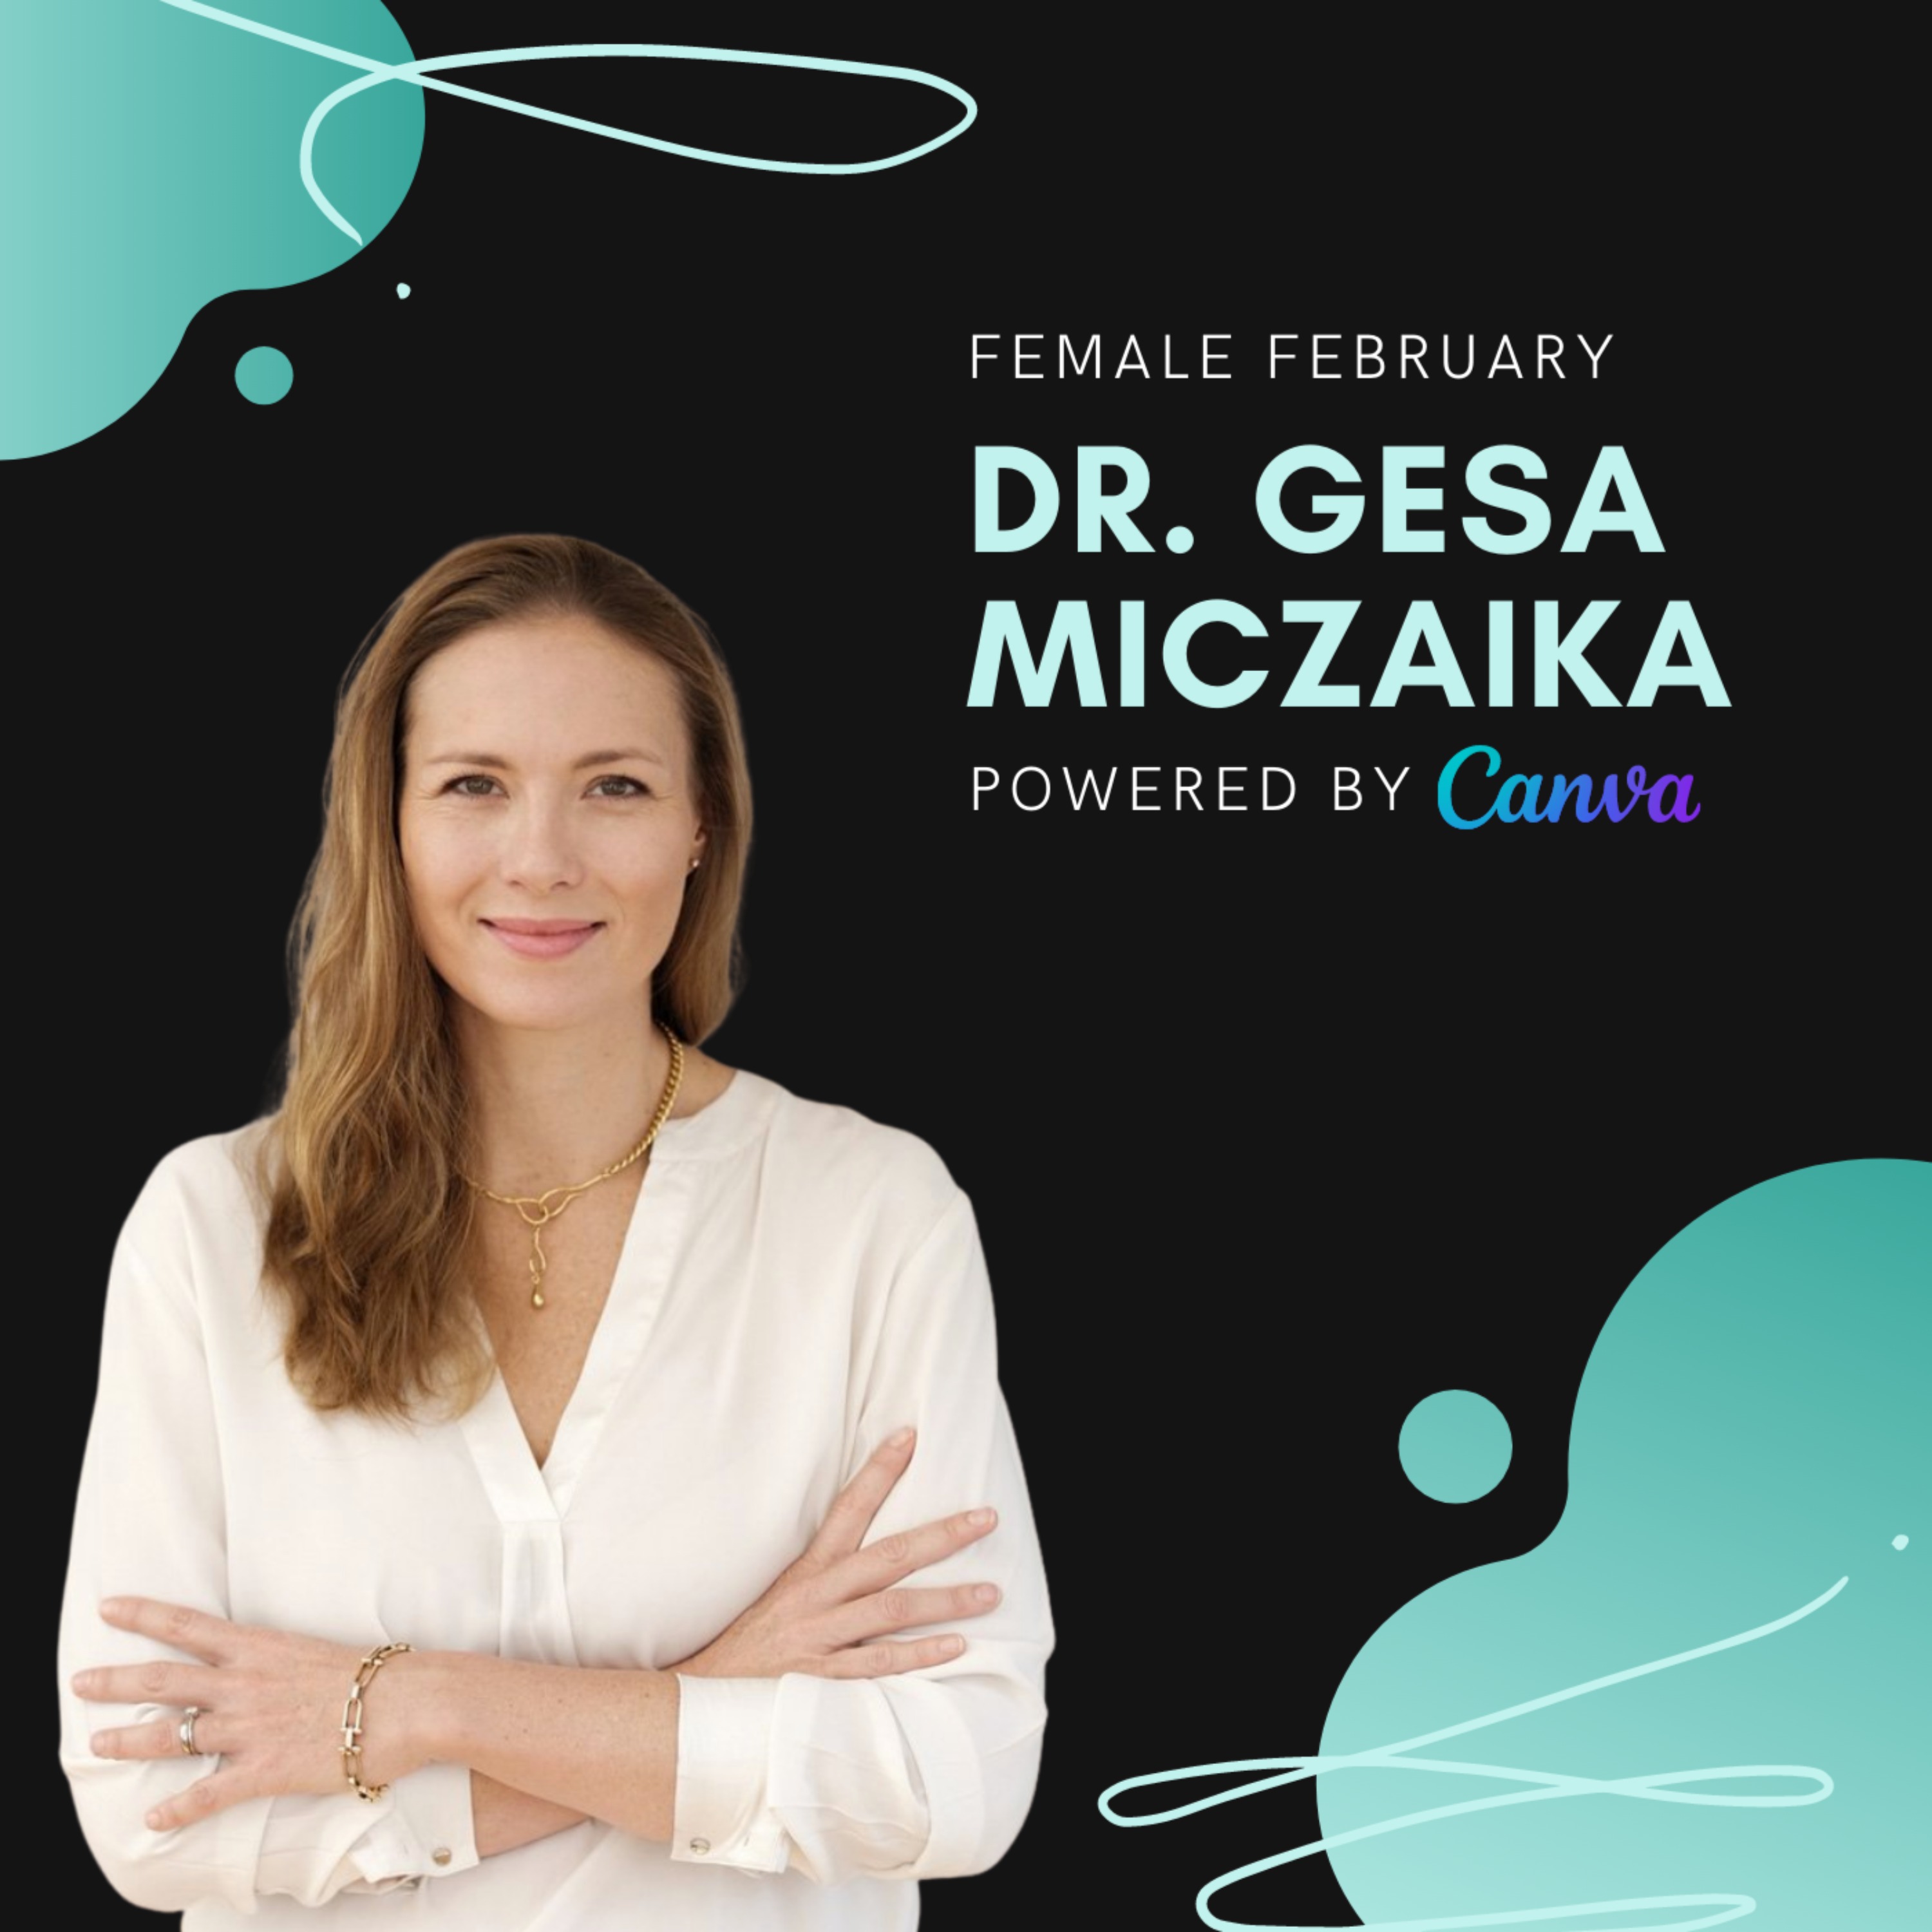 Dr. Gesa Miczaika, Auxxo Female Catalyst Fund | Female February Image